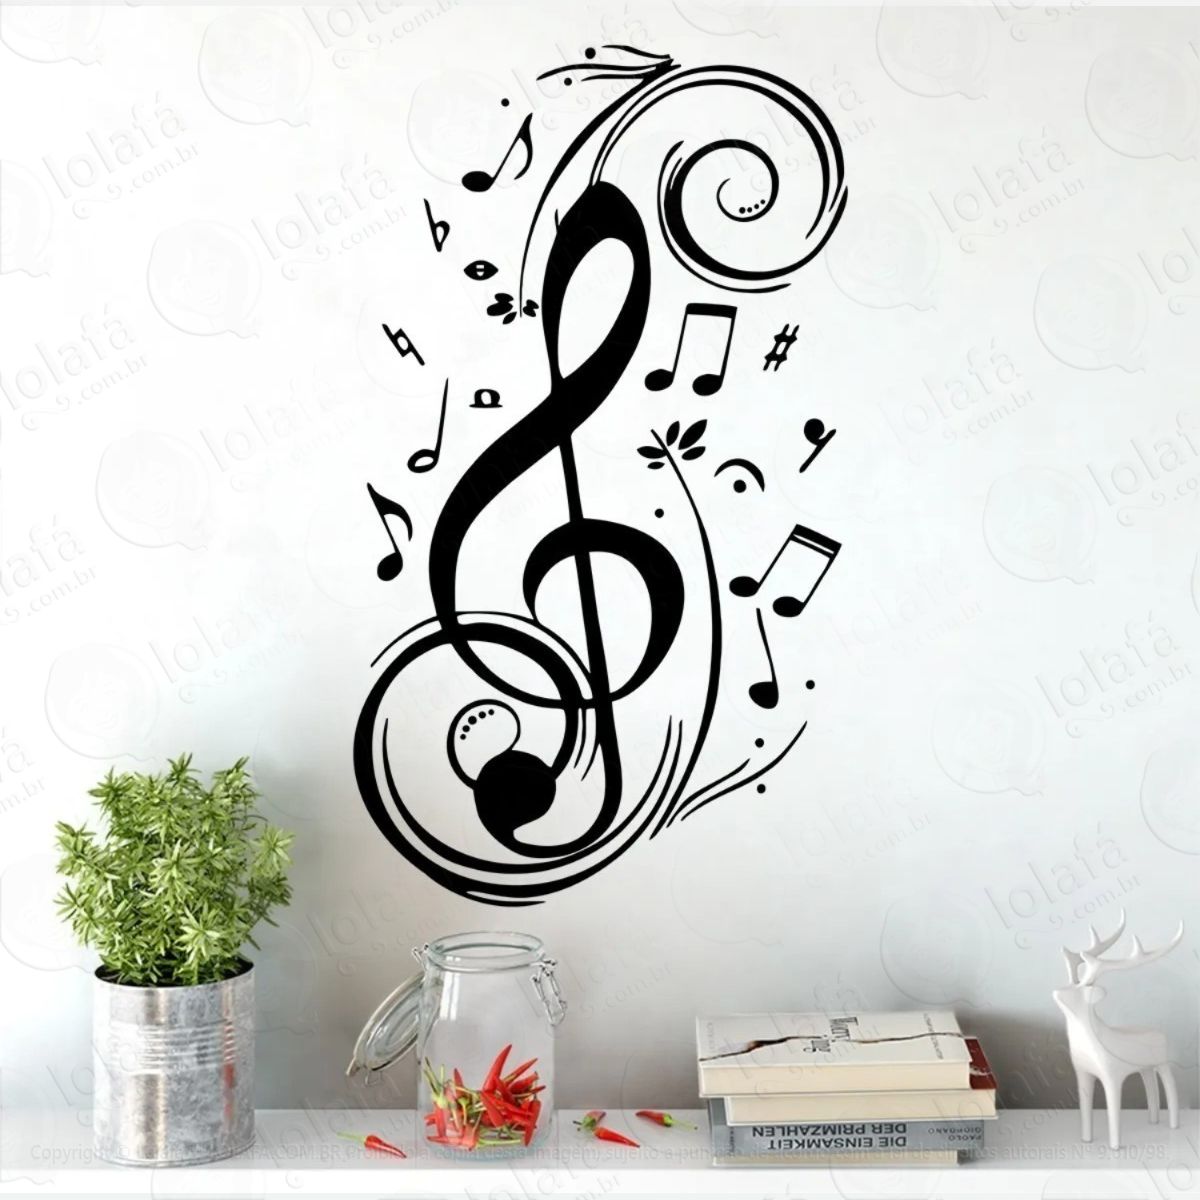 adesivo vinil decorativo para parede sala quarto notas music mod:569